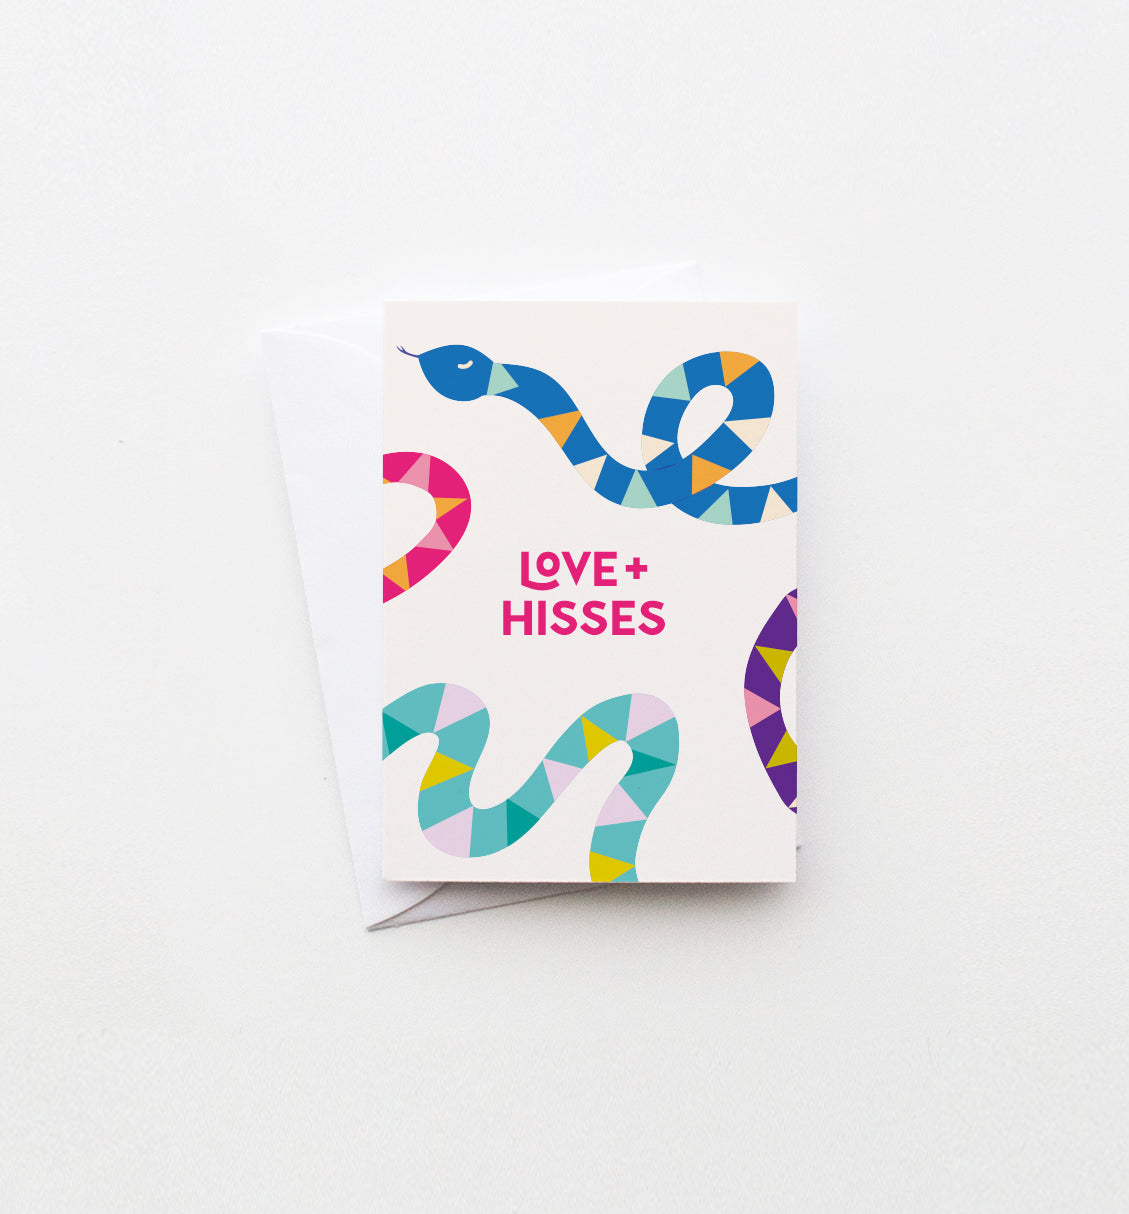 Love + Hisses mini card